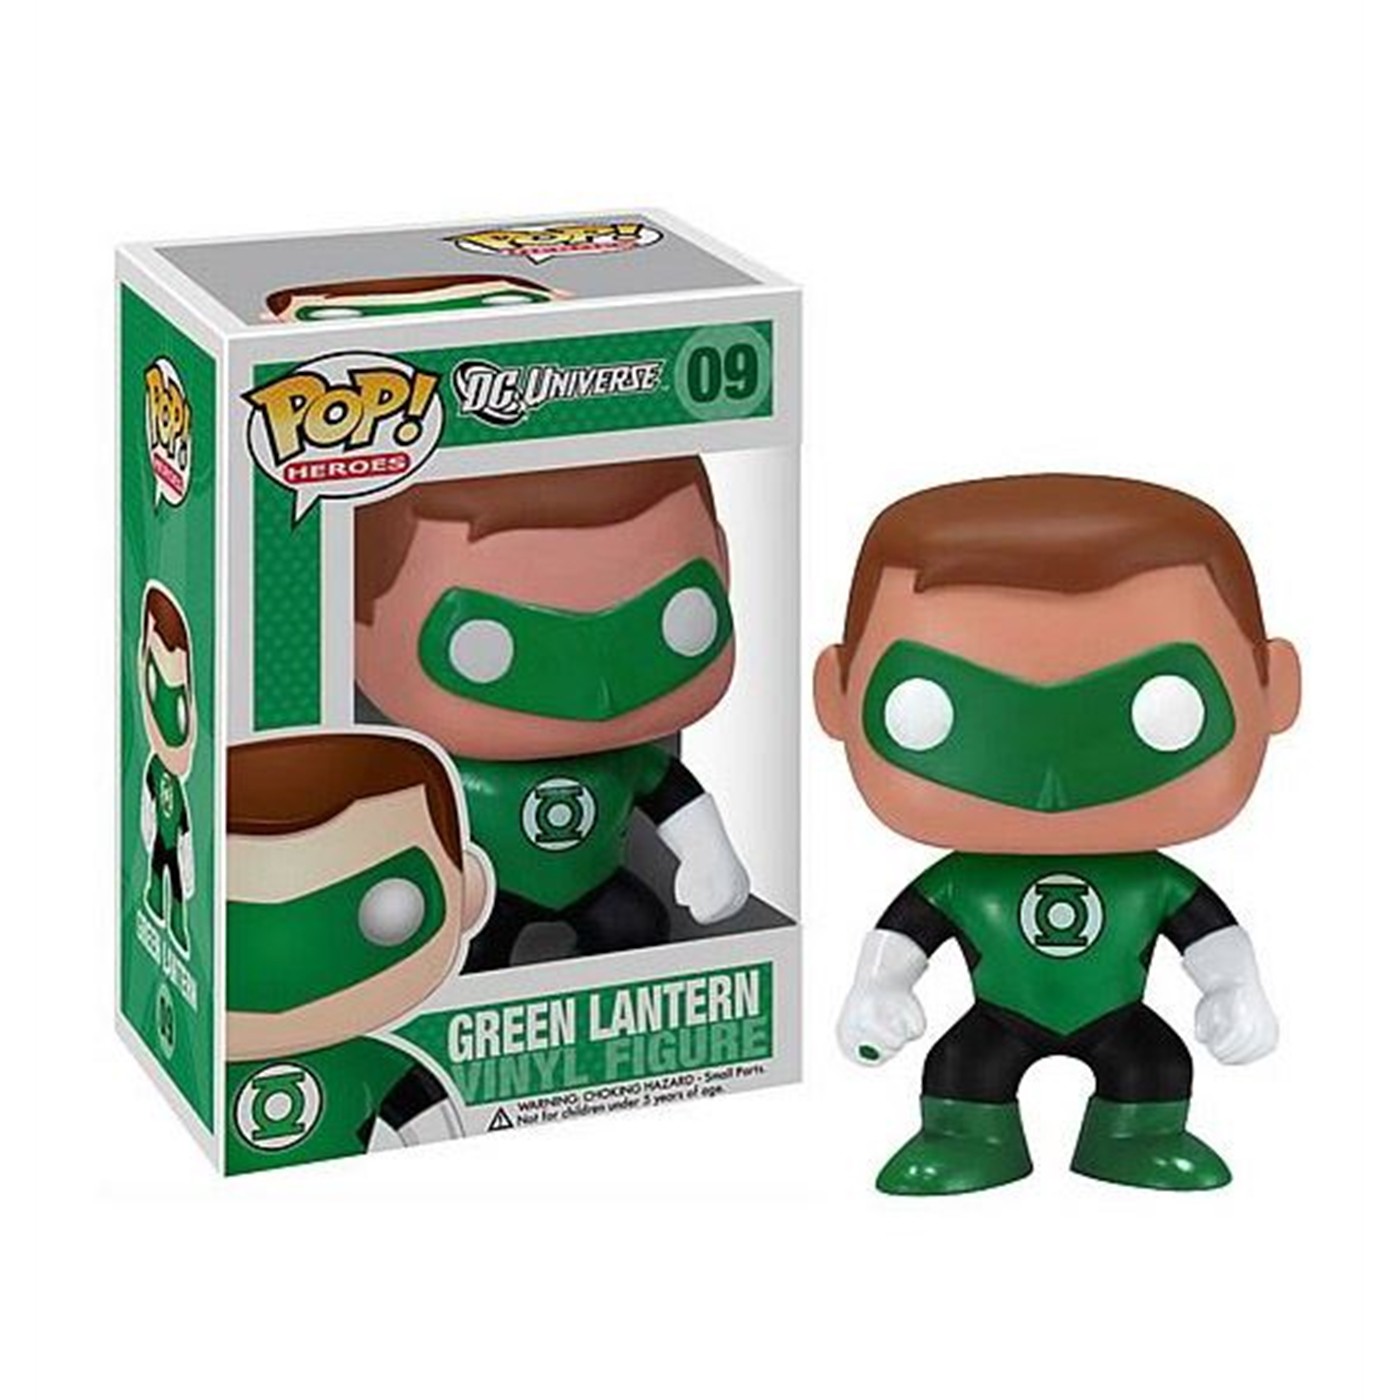 Green Lantern Pop Heroes Vinyl Figure